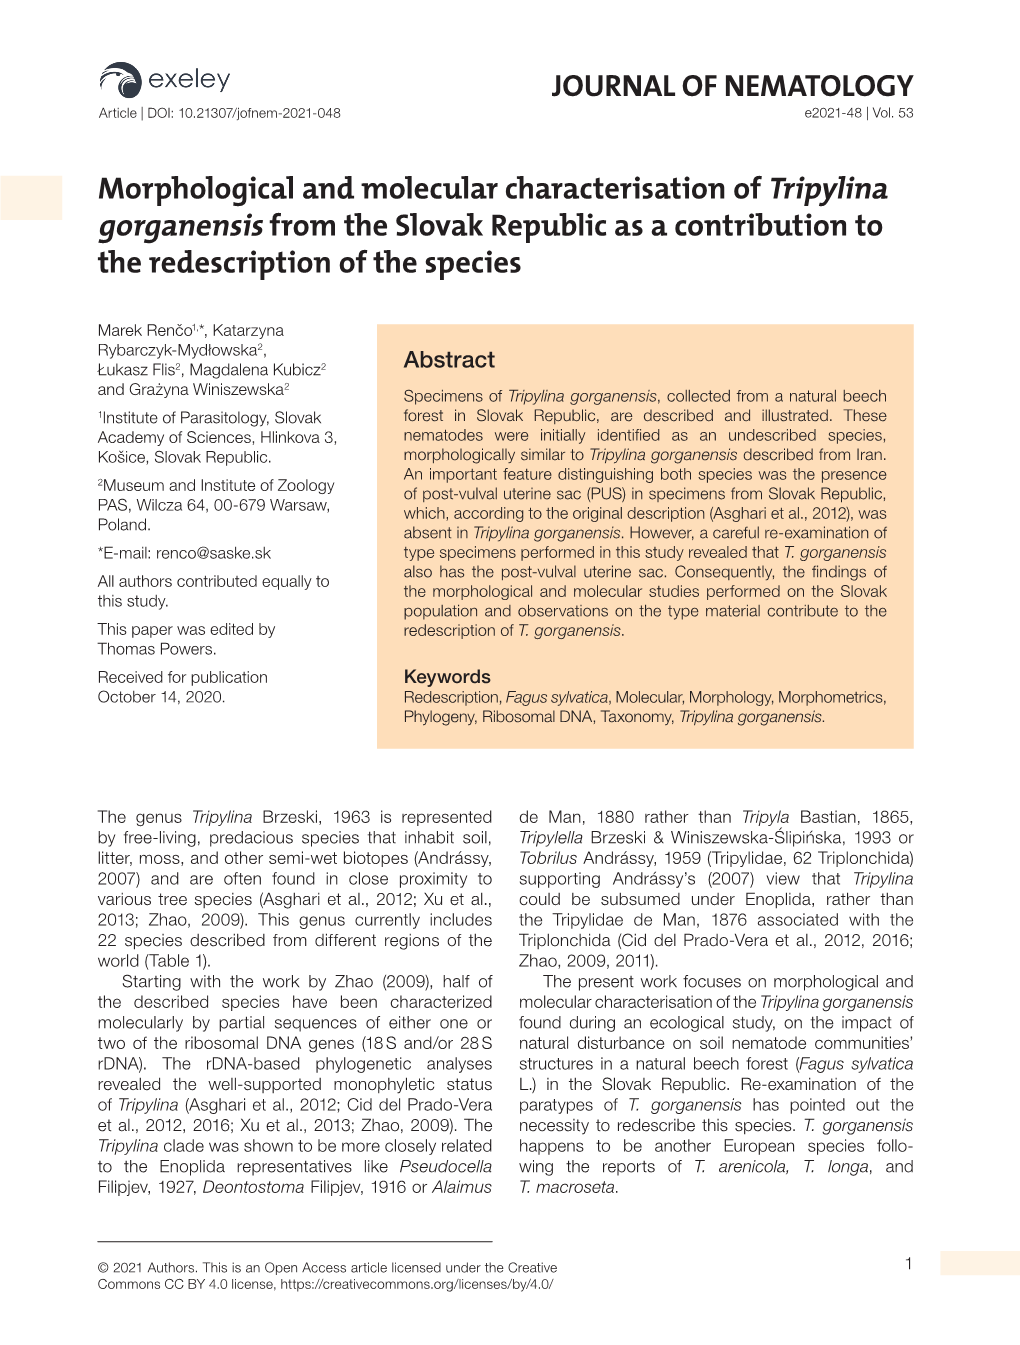 JOURNAL of NEMATOLOGY Morphological and Molecular